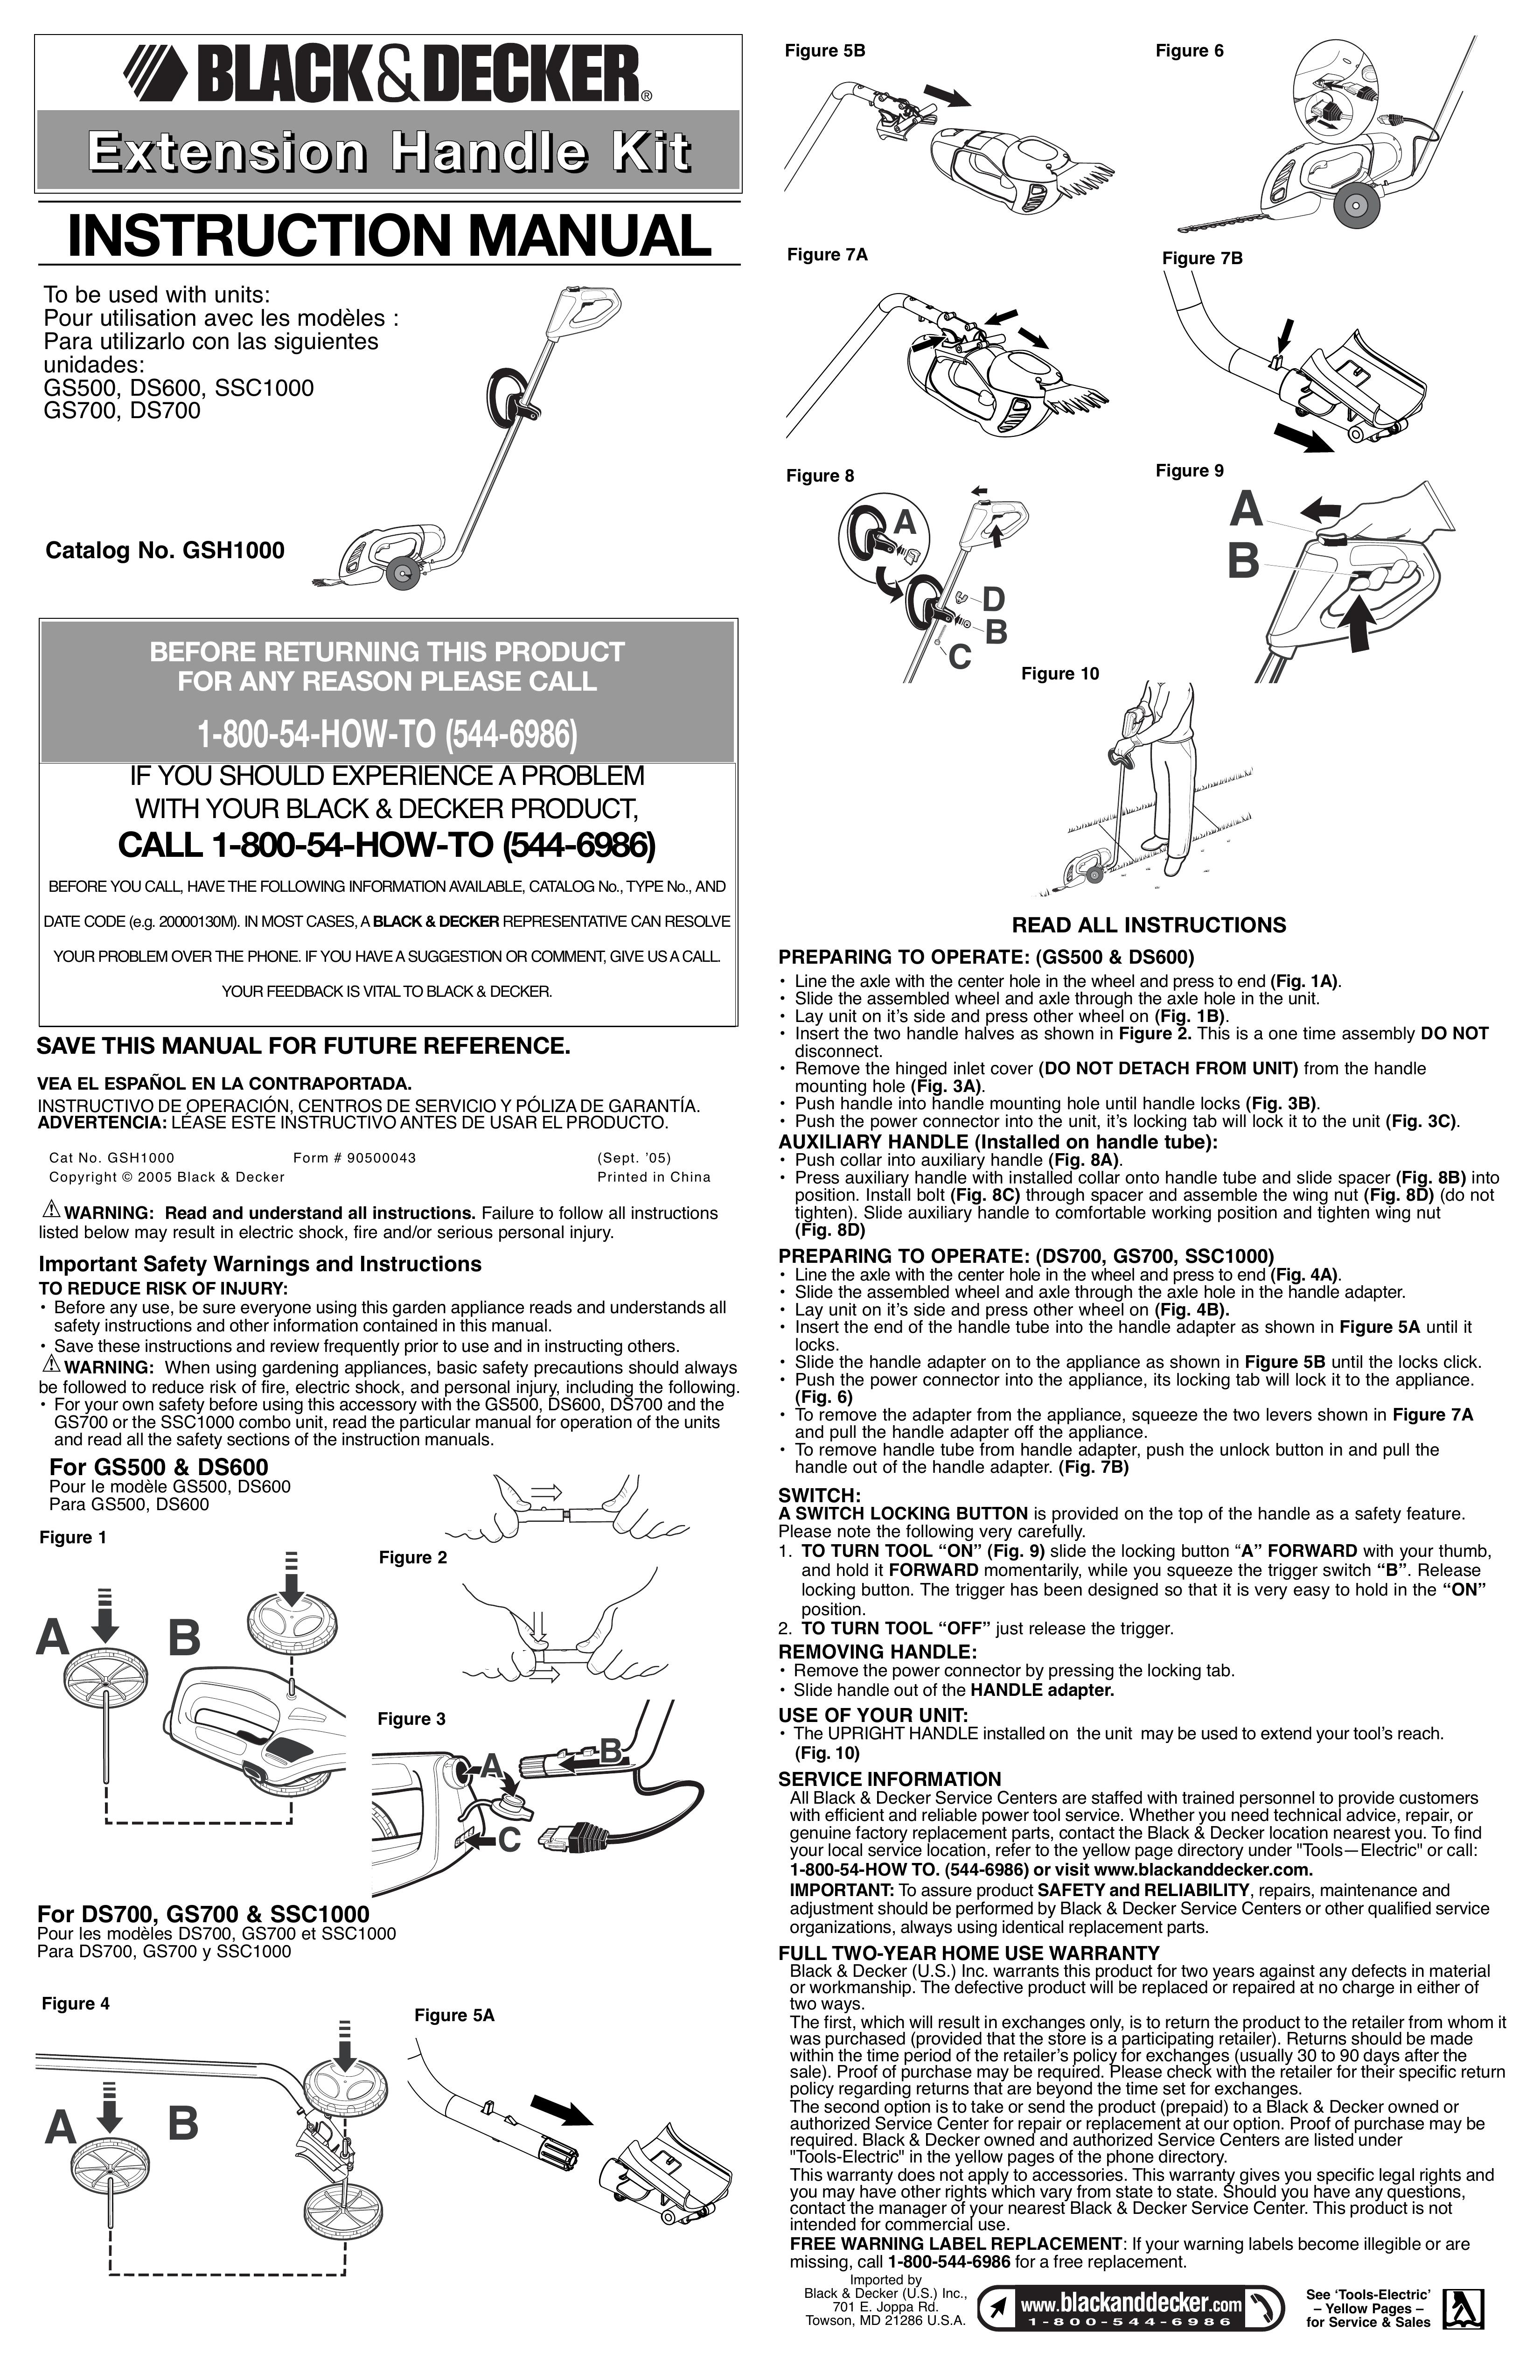 Black & Decker DS700 Trimmer User Manual